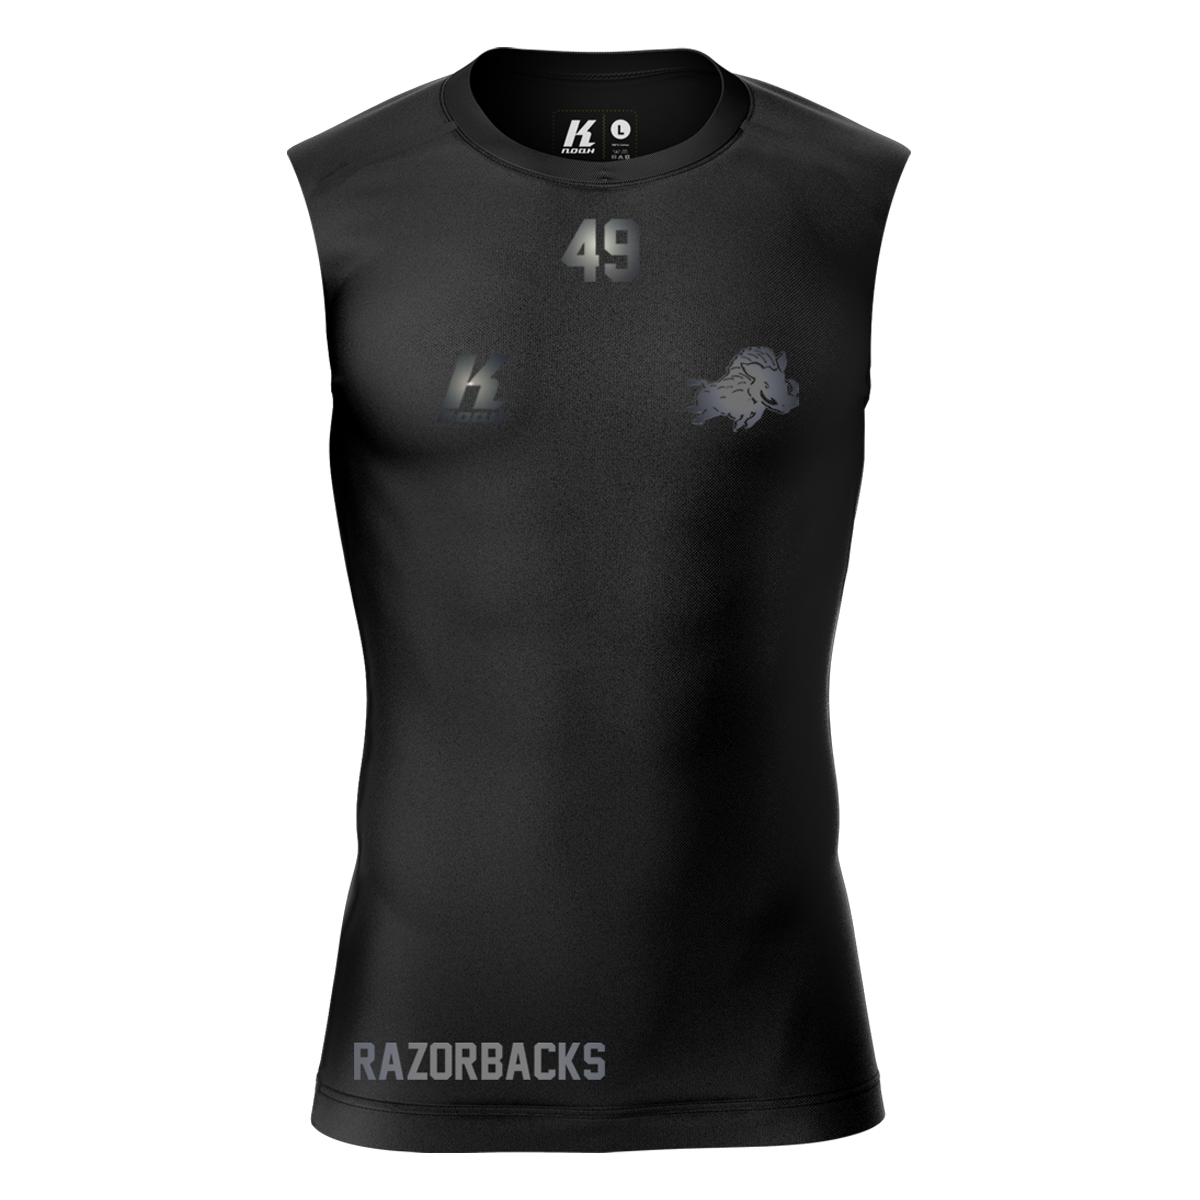 Razorbacks "Blackline" K.Tech Compression Sleeveless Shirt with Playernumber/Initials